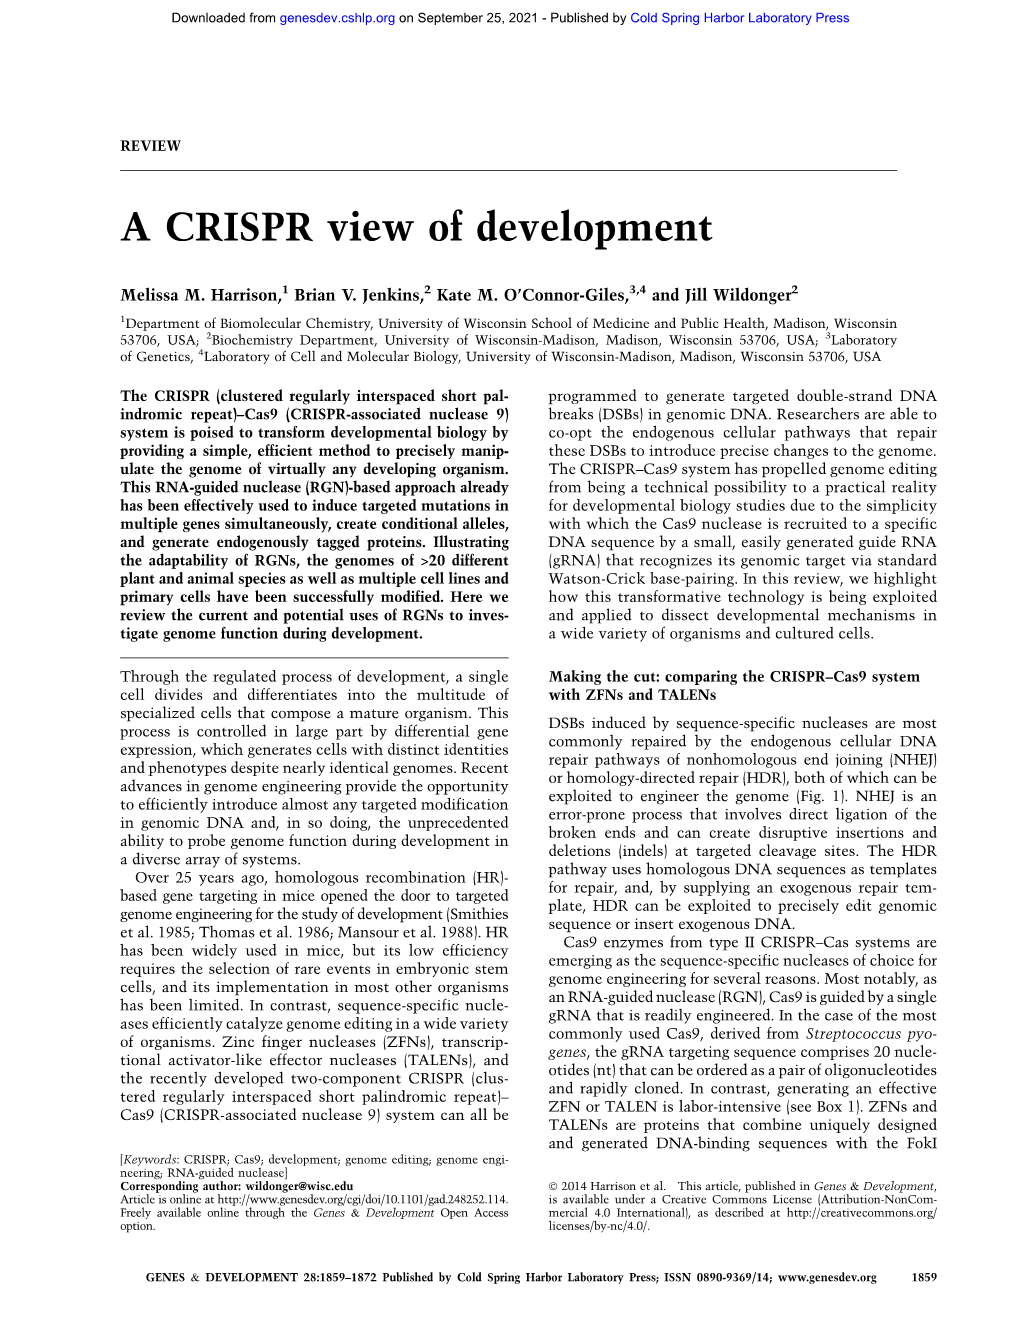 A CRISPR View of Development